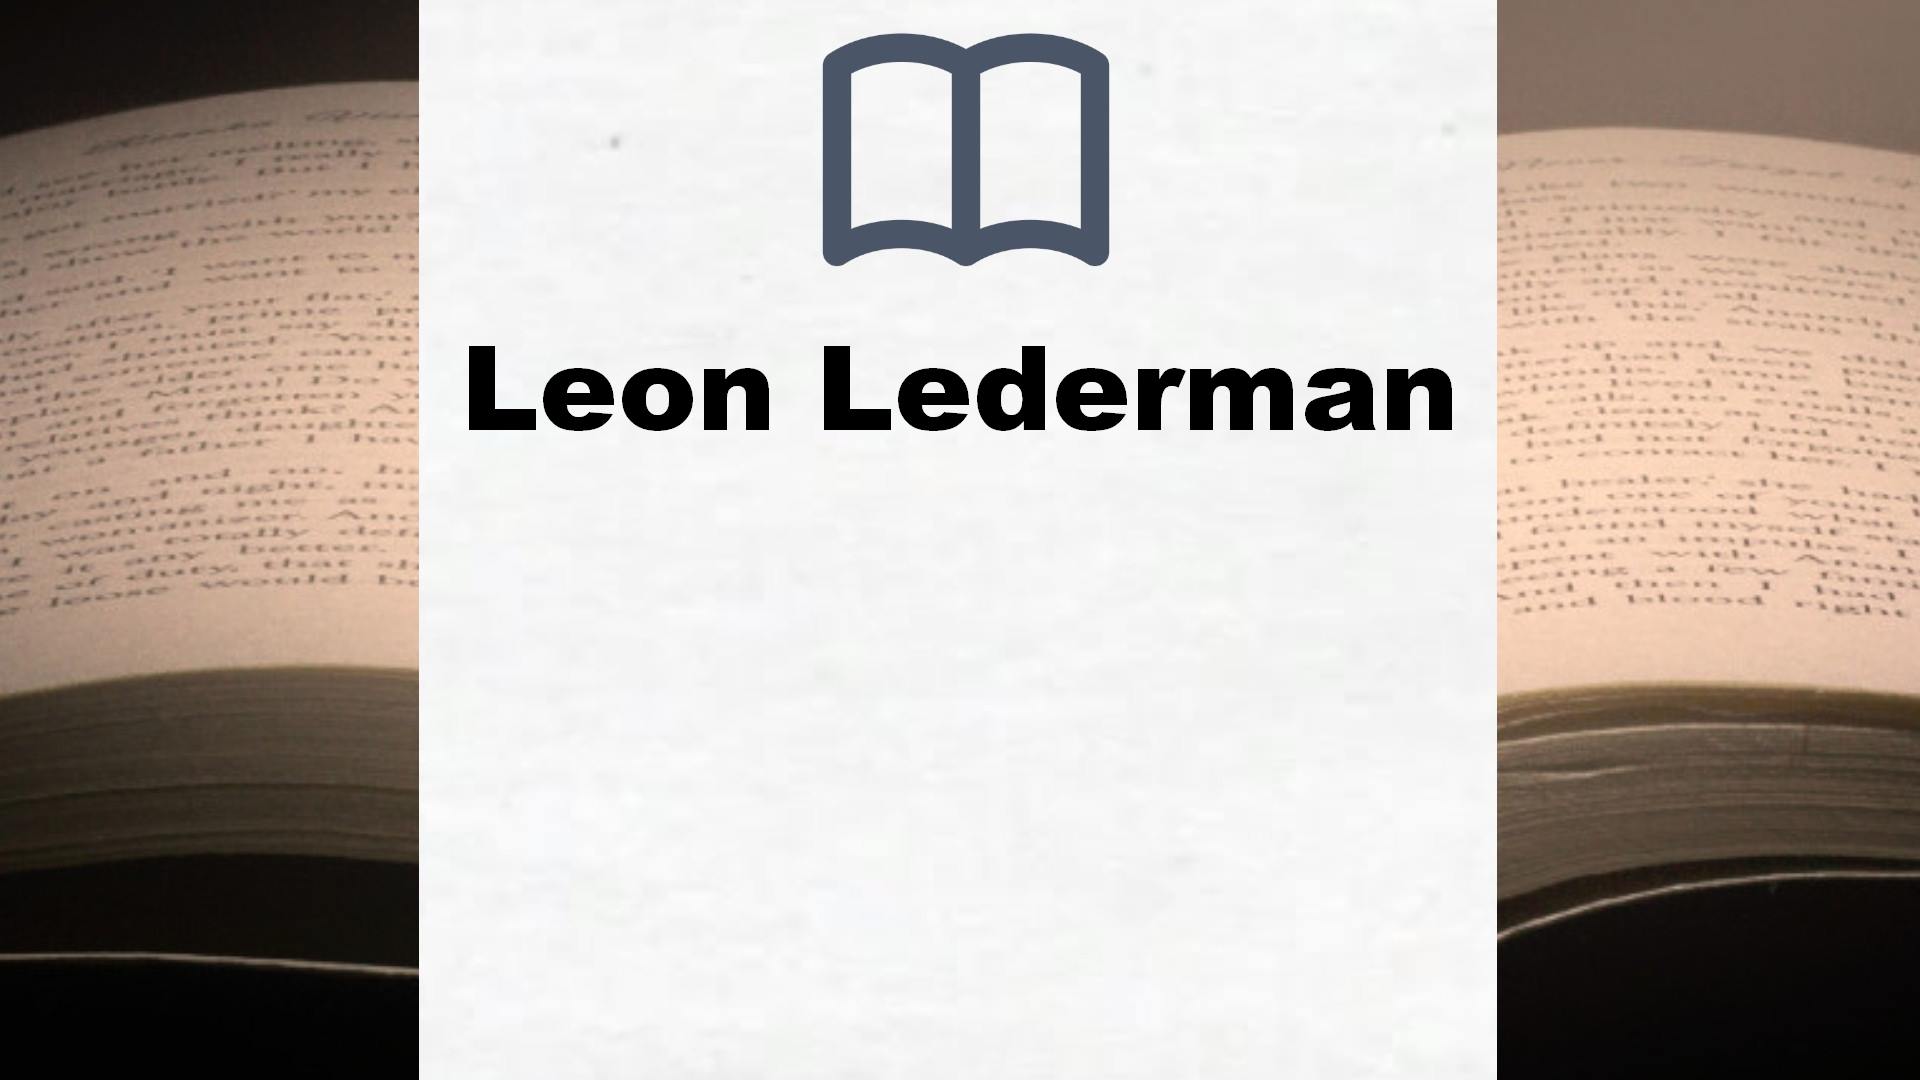 Libros Leon Lederman